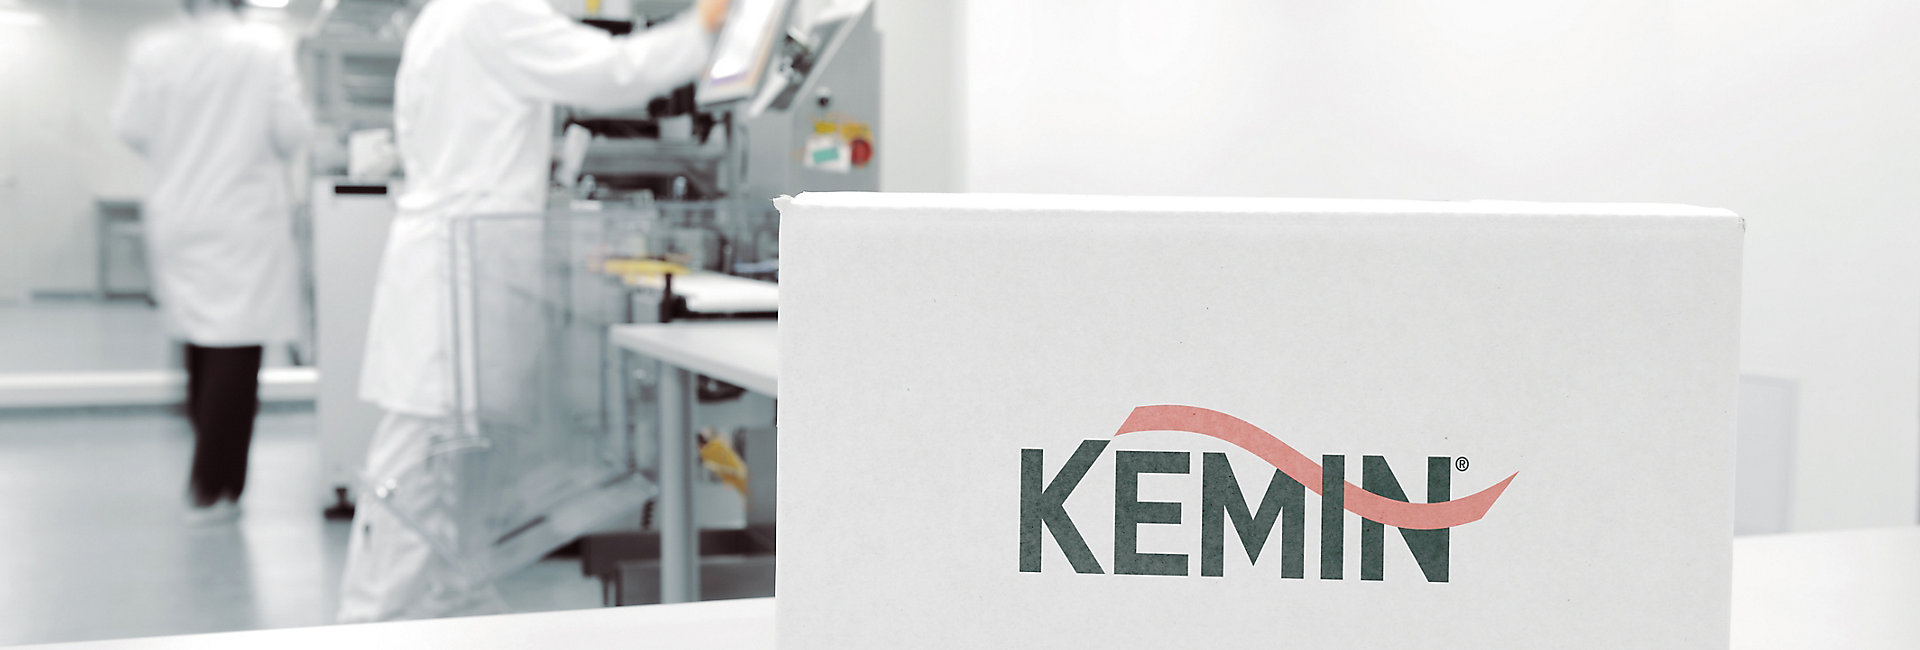 Kemin Production Line